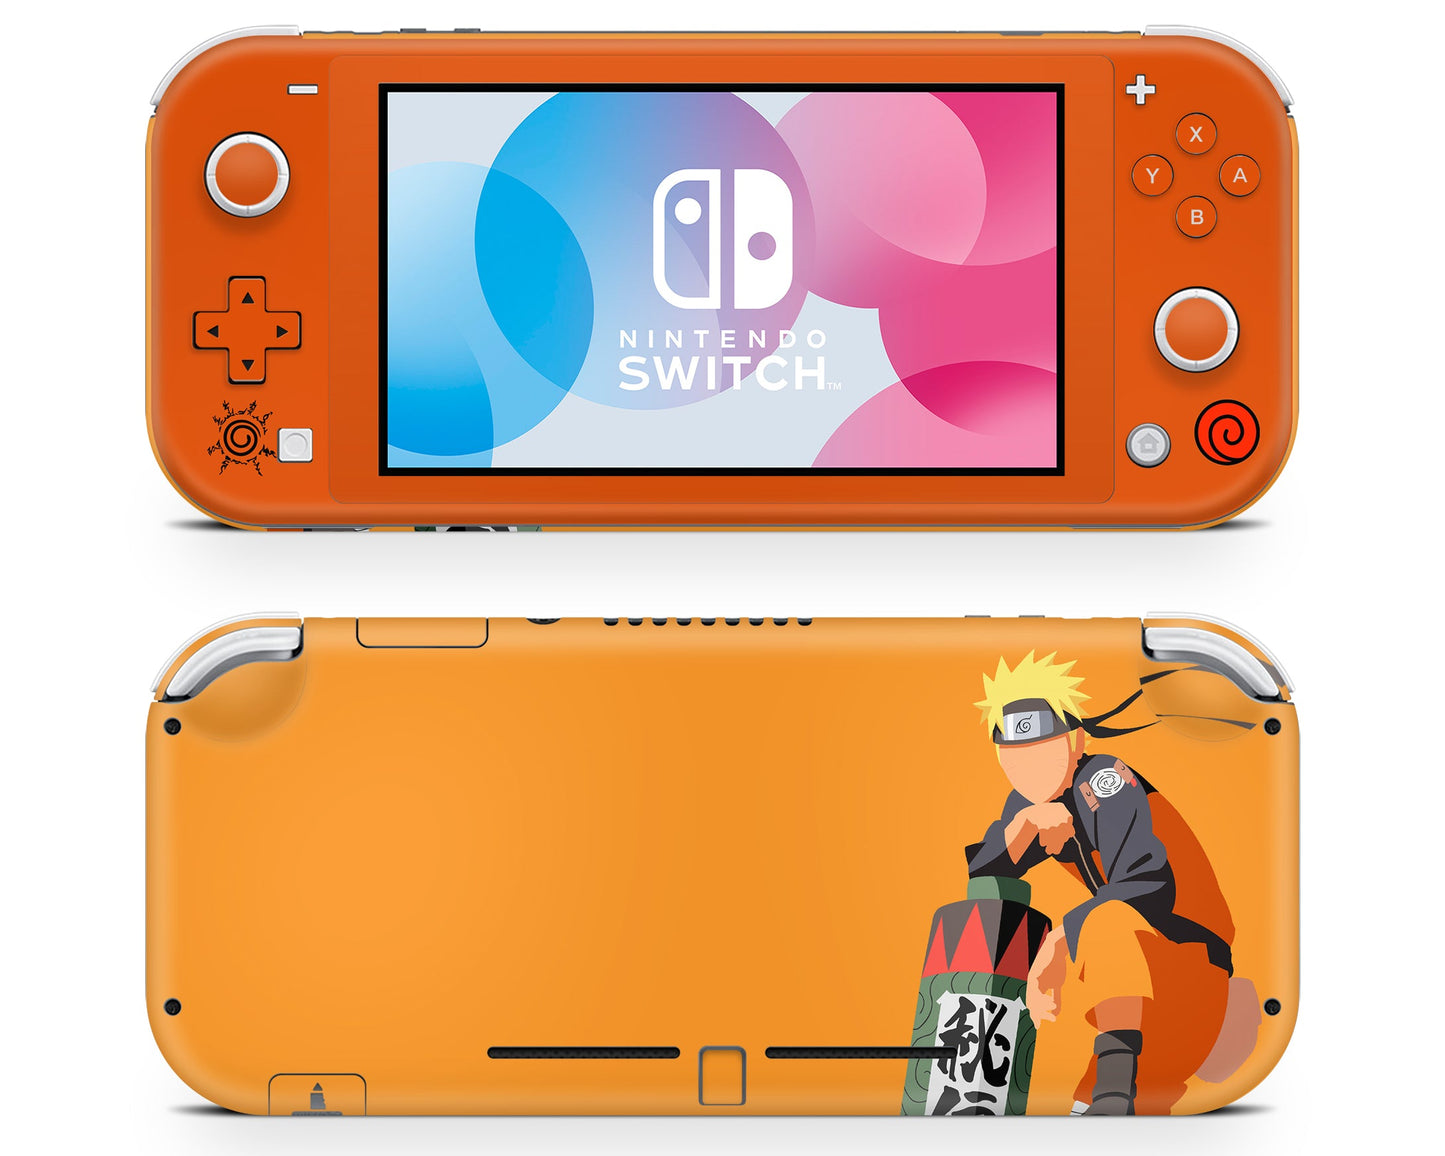 Housse de Protection Naruto Nintendo Switch et Switch Lite